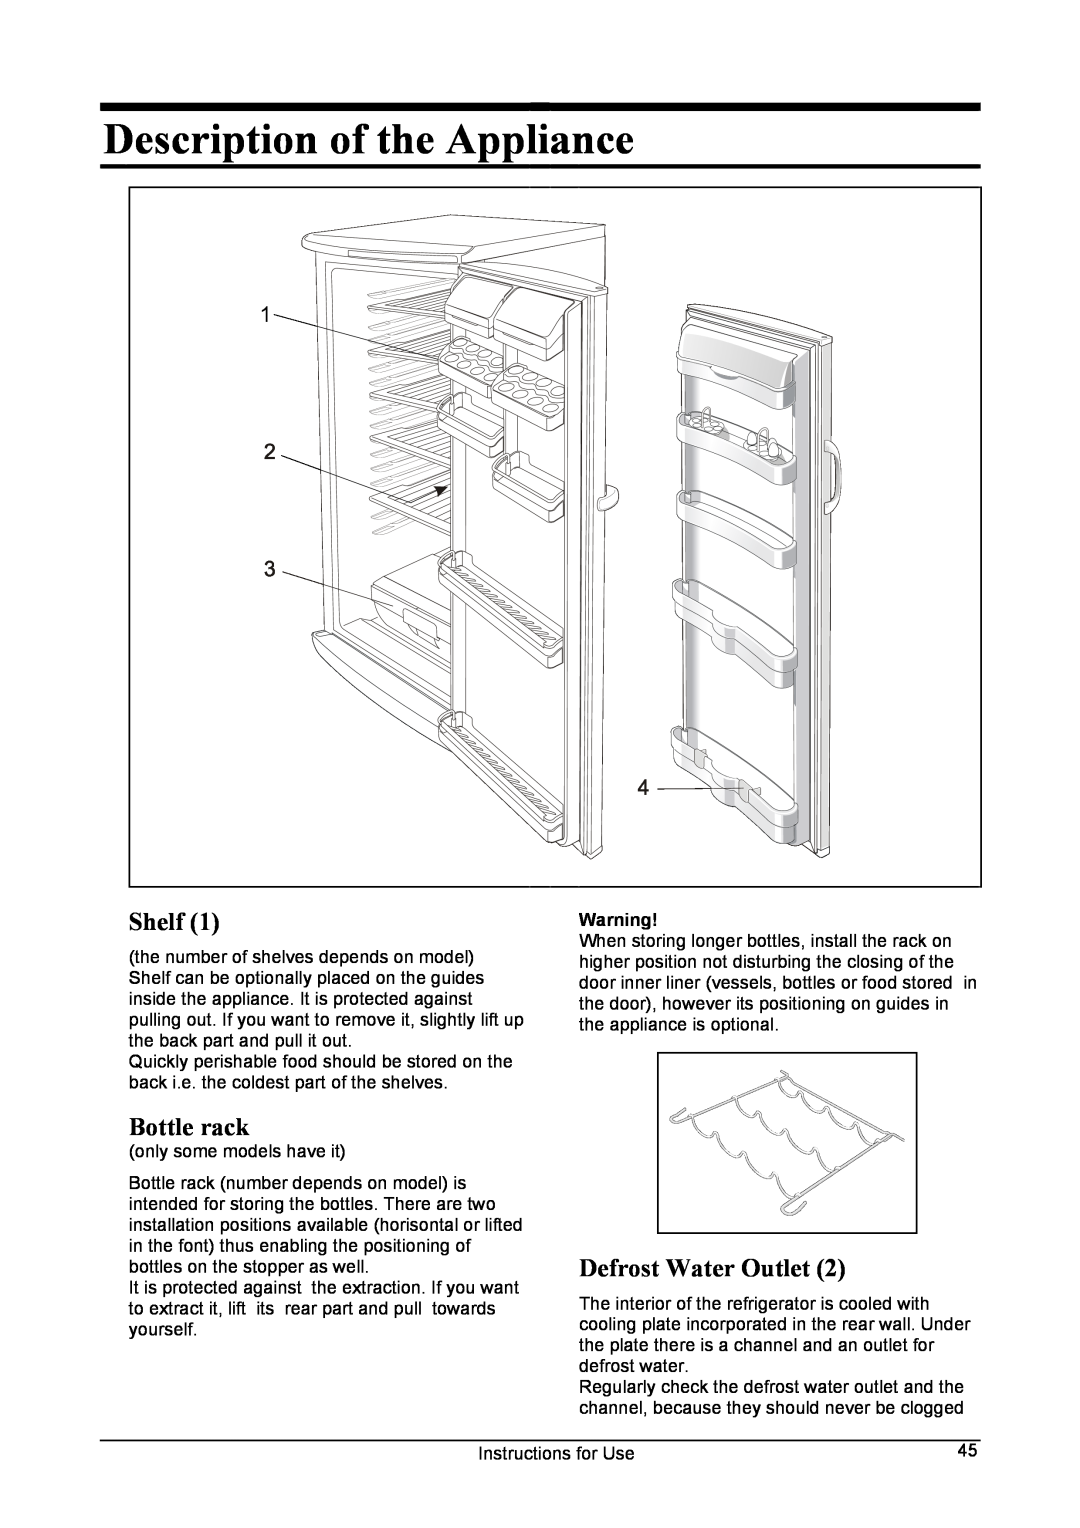 Smeg FA28A manual Description of the Appliance, Shelf, Bottle rack, Defrost Water Outlet 